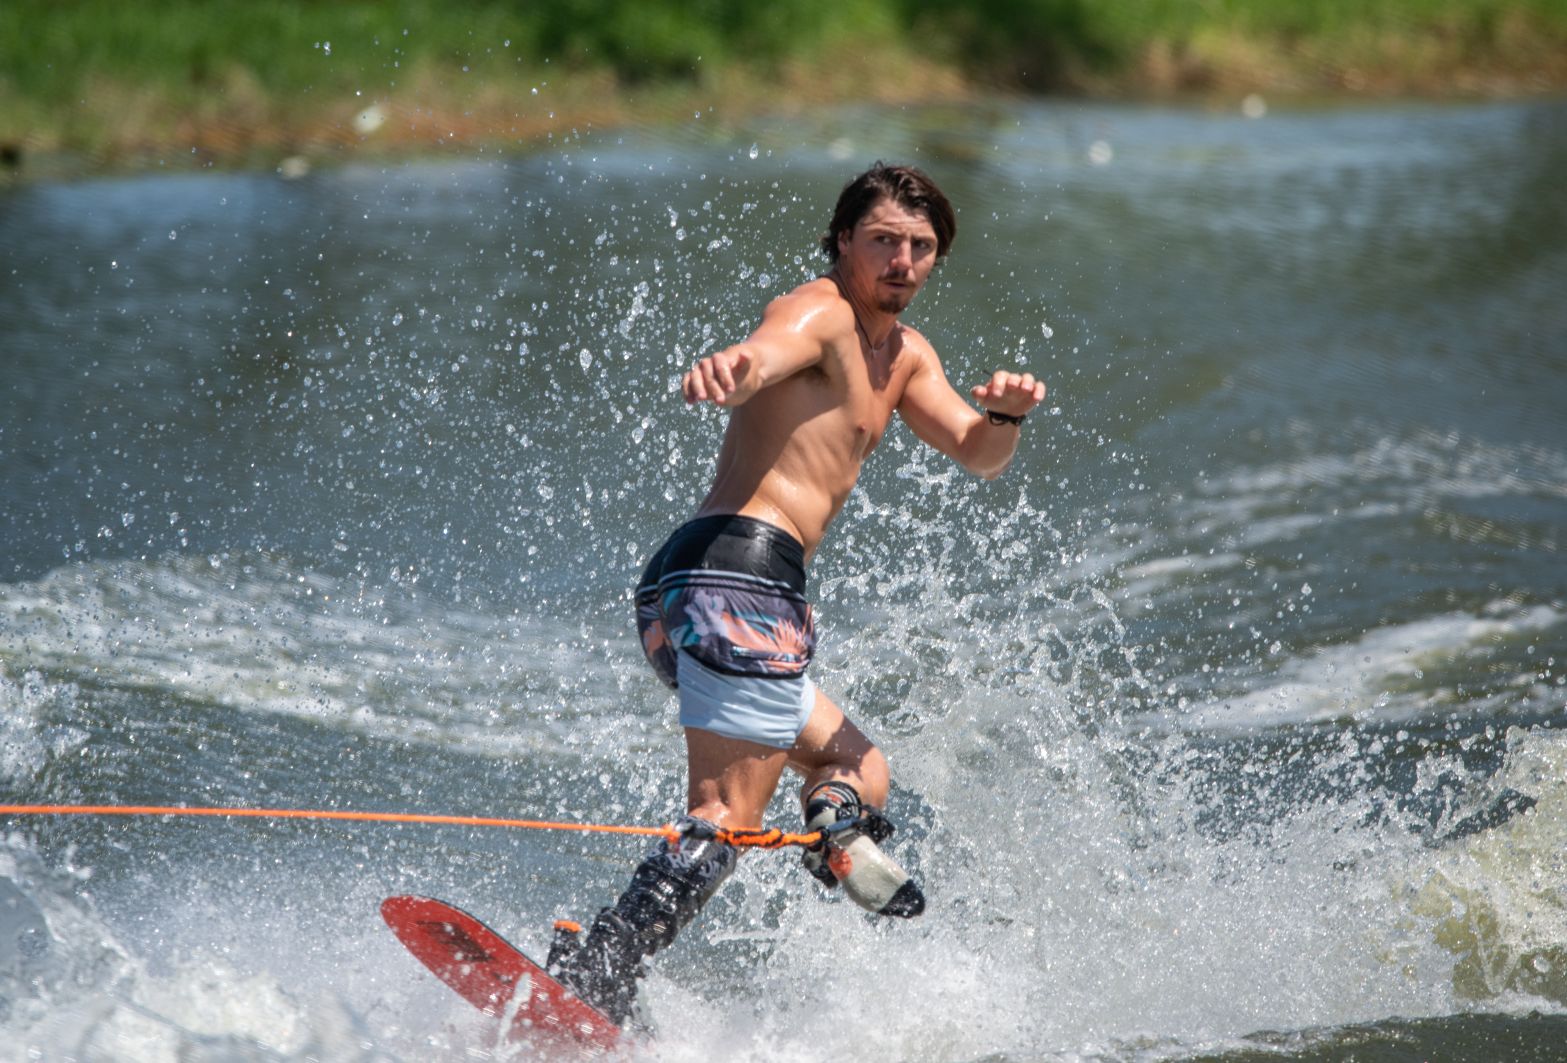 water skiing tricks